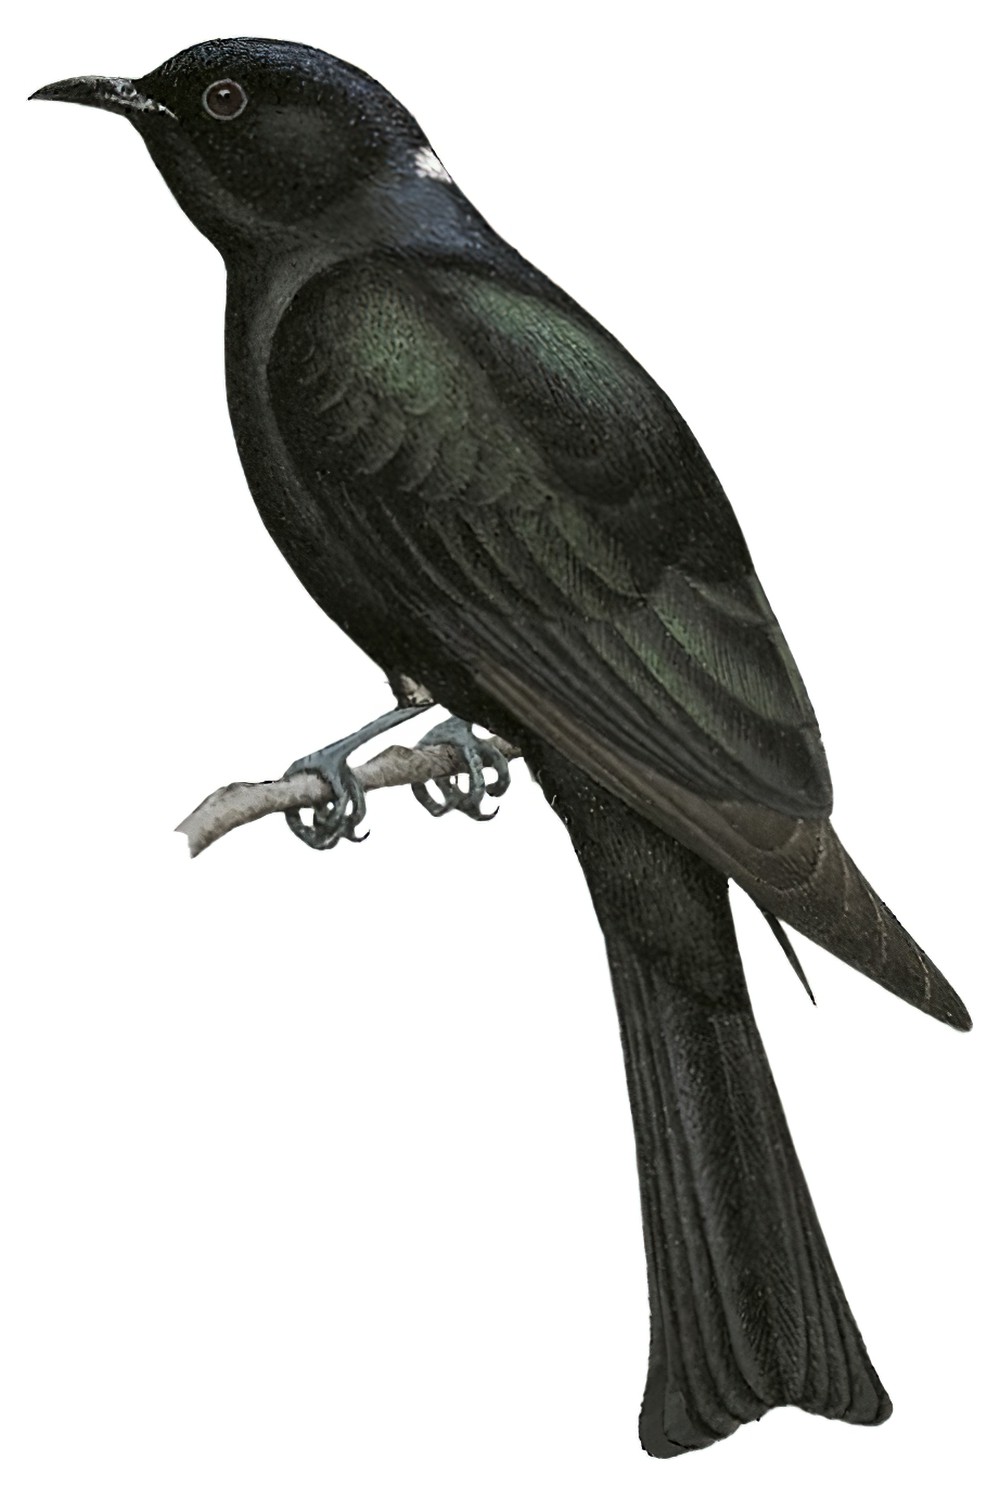 Square-tailed Drongo-Cuckoo / Surniculus lugubris